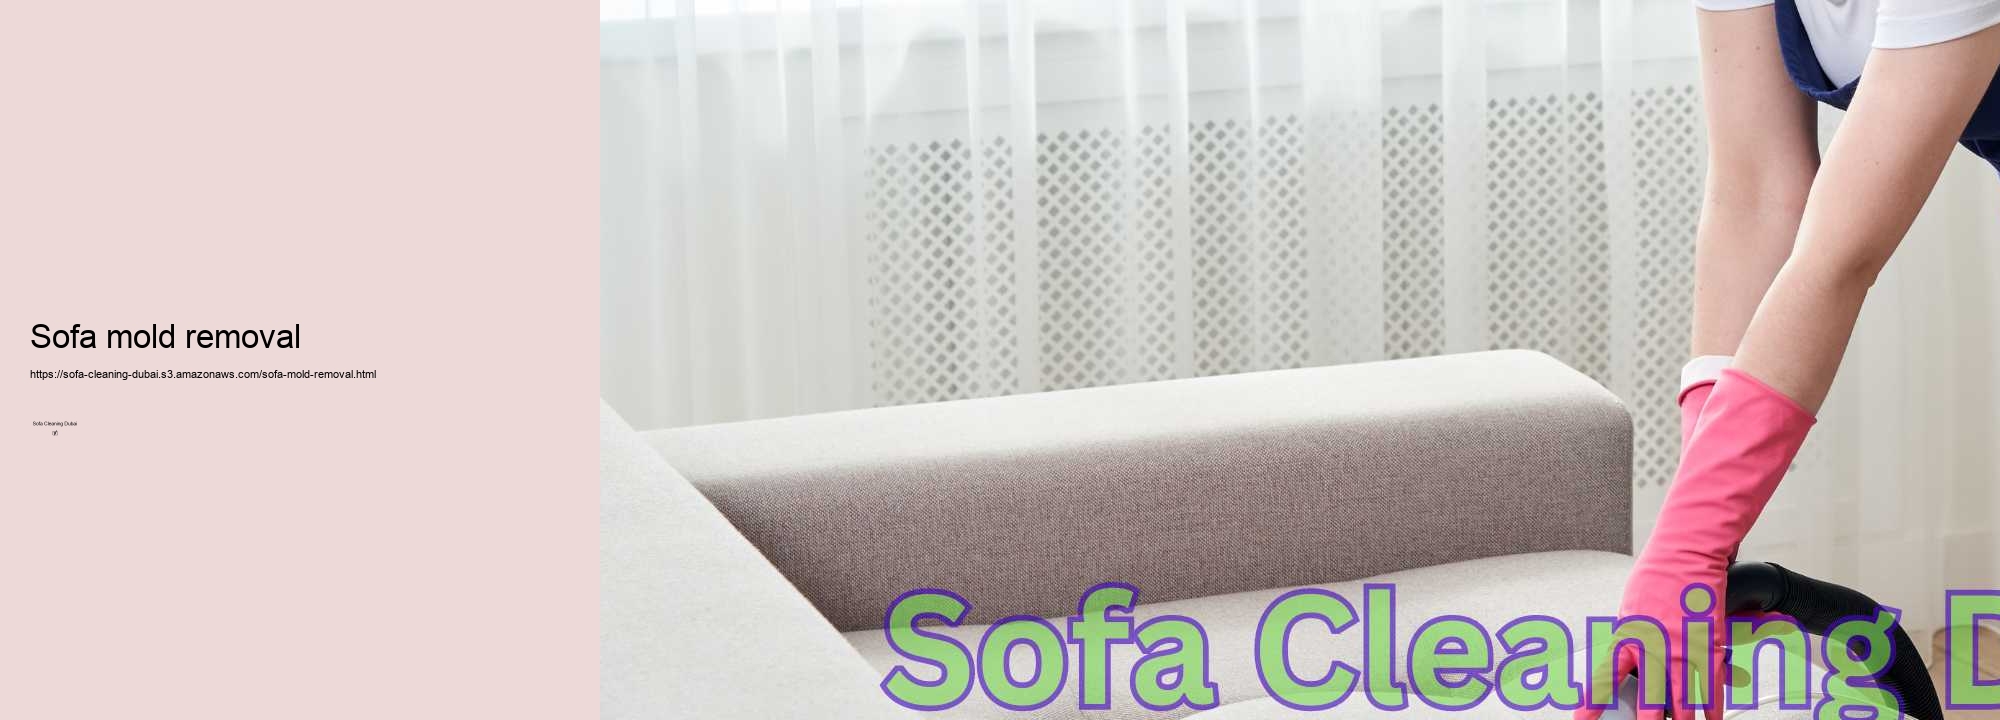 Sofa mold removal